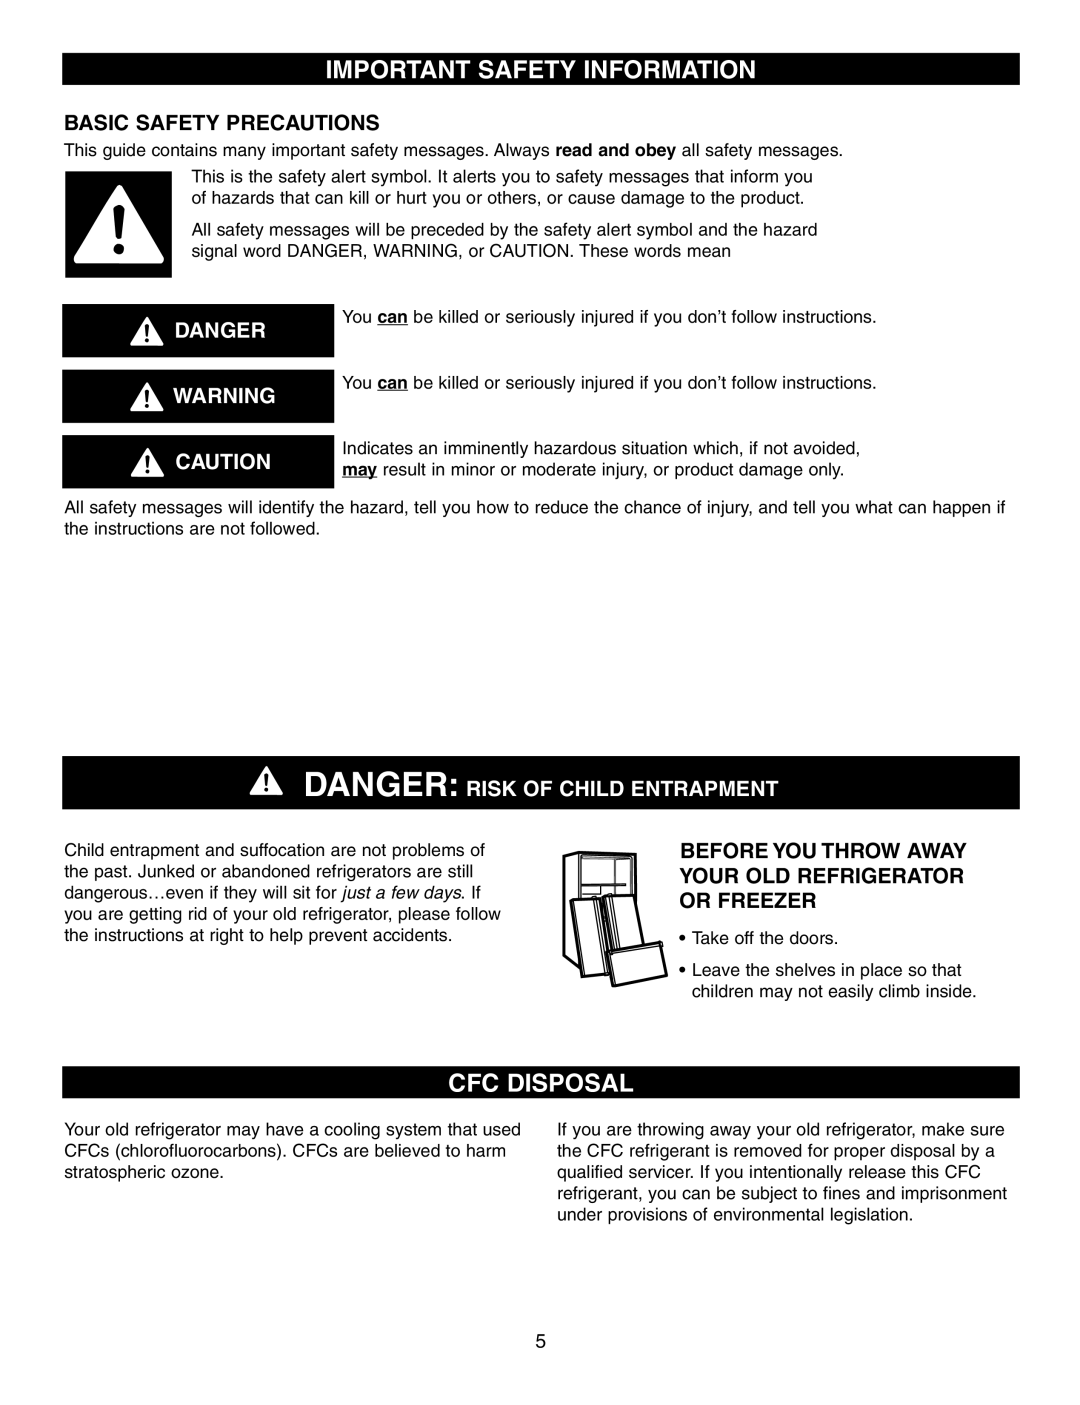 LG Electronics LFX25950 manual Important Safety Information, Cfc Disposal, Basic Safety Precautions, Danger 